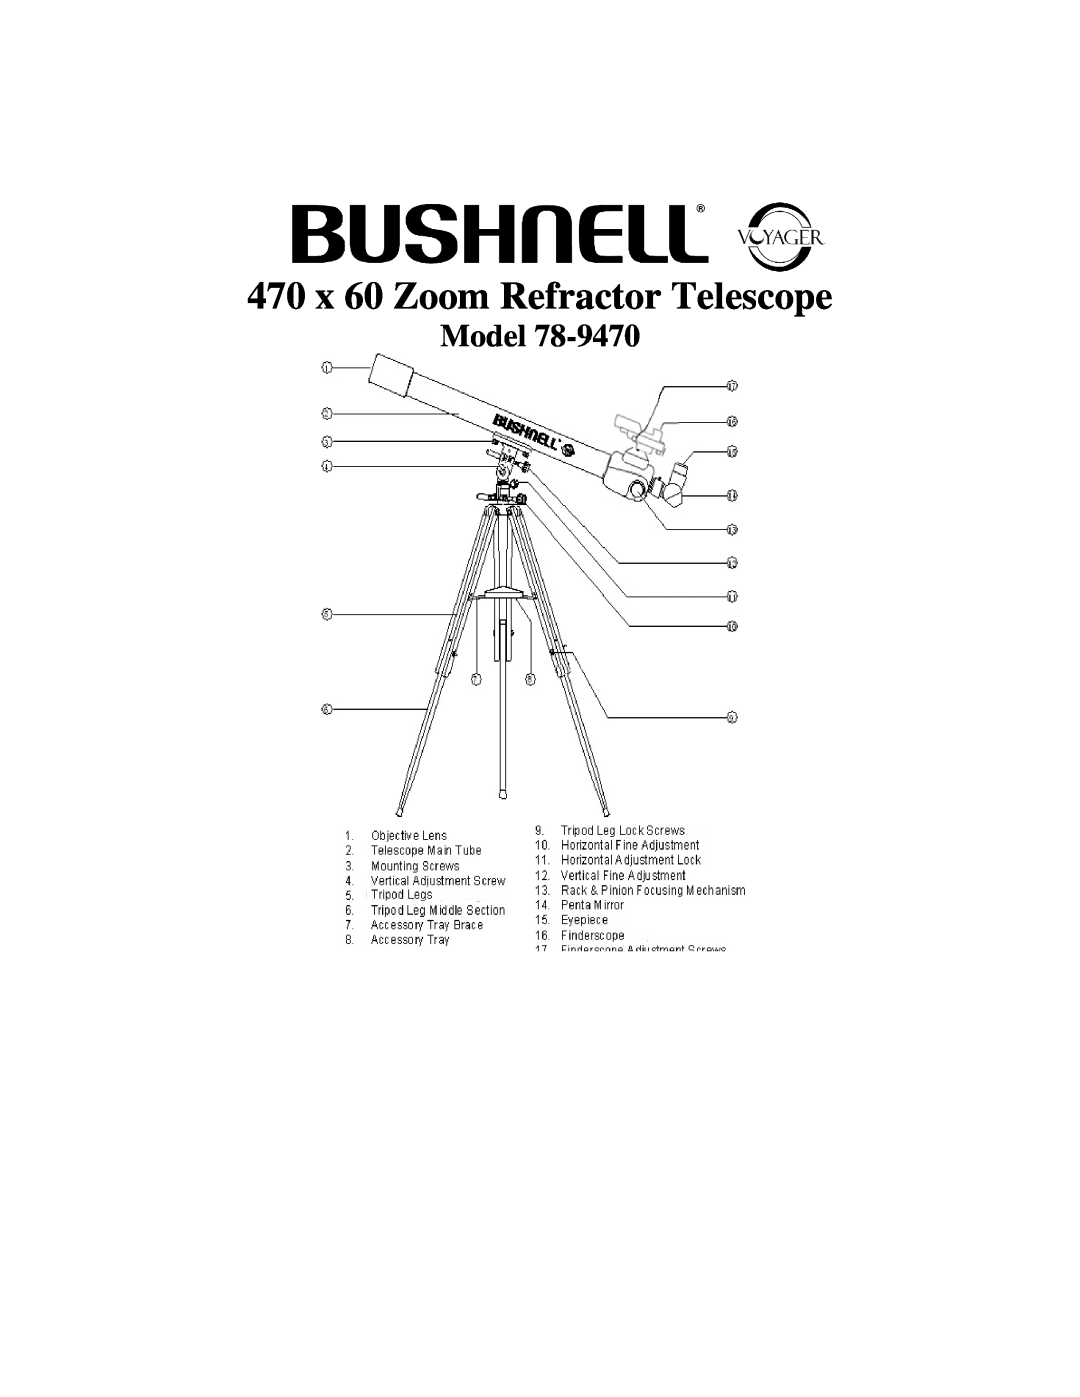 Bushnell 78-9470 manual 470 x 60 Zoom Refractor Telescope, Model 